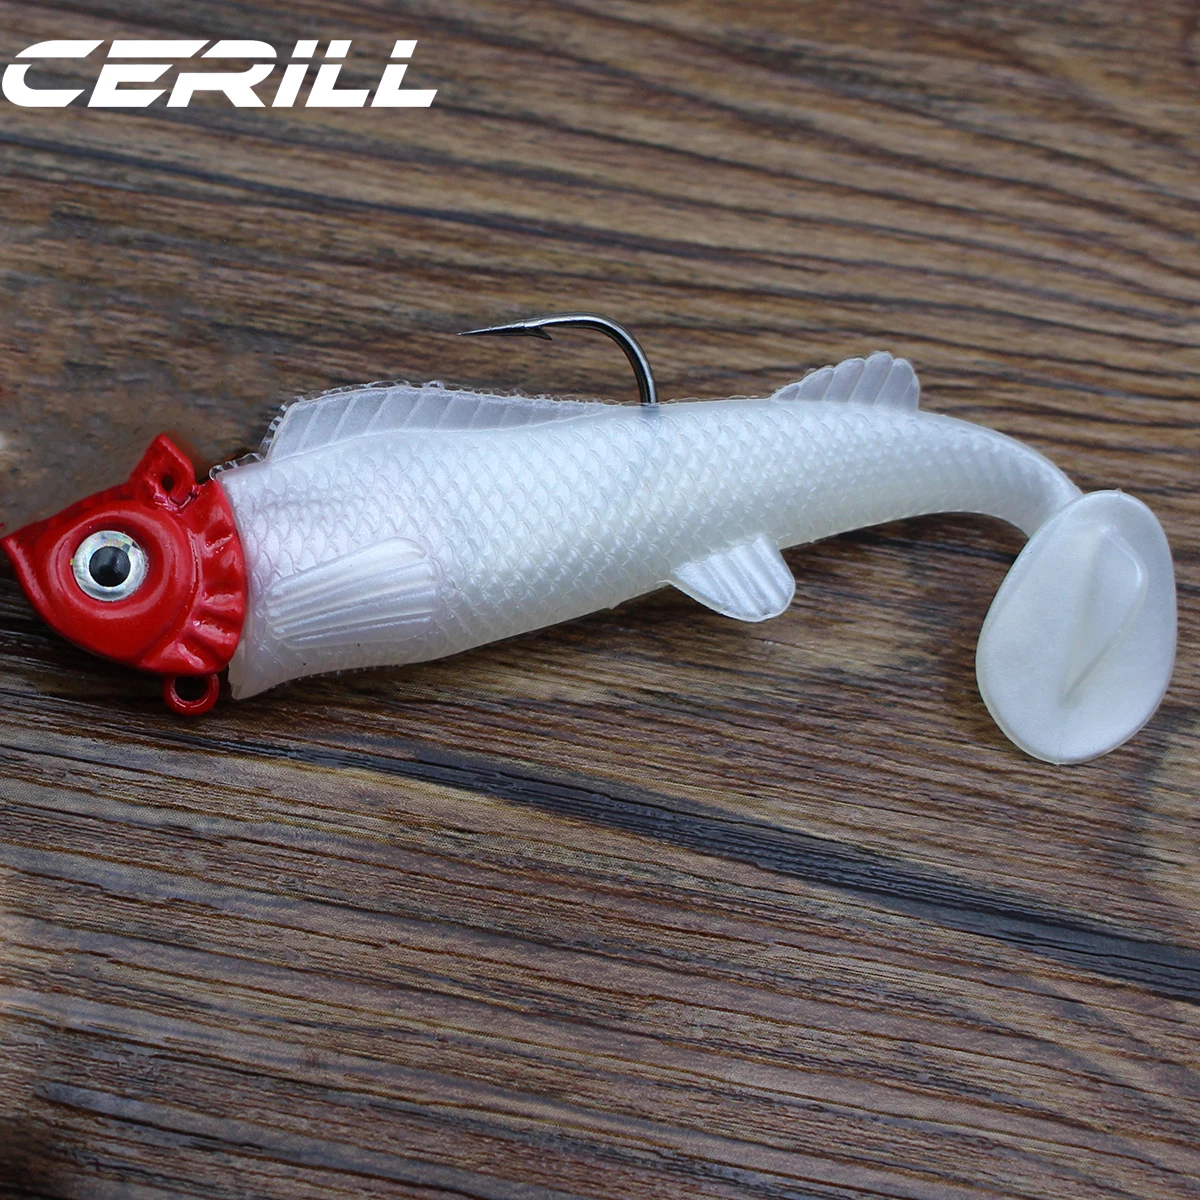 

Cerill 5 PCS 85mm 14.5g Jig Head Minnow Soft Fishing Lure Paddle Tail Worm Bait Bass Pike Silicone Artificial Lifelike Swimbait